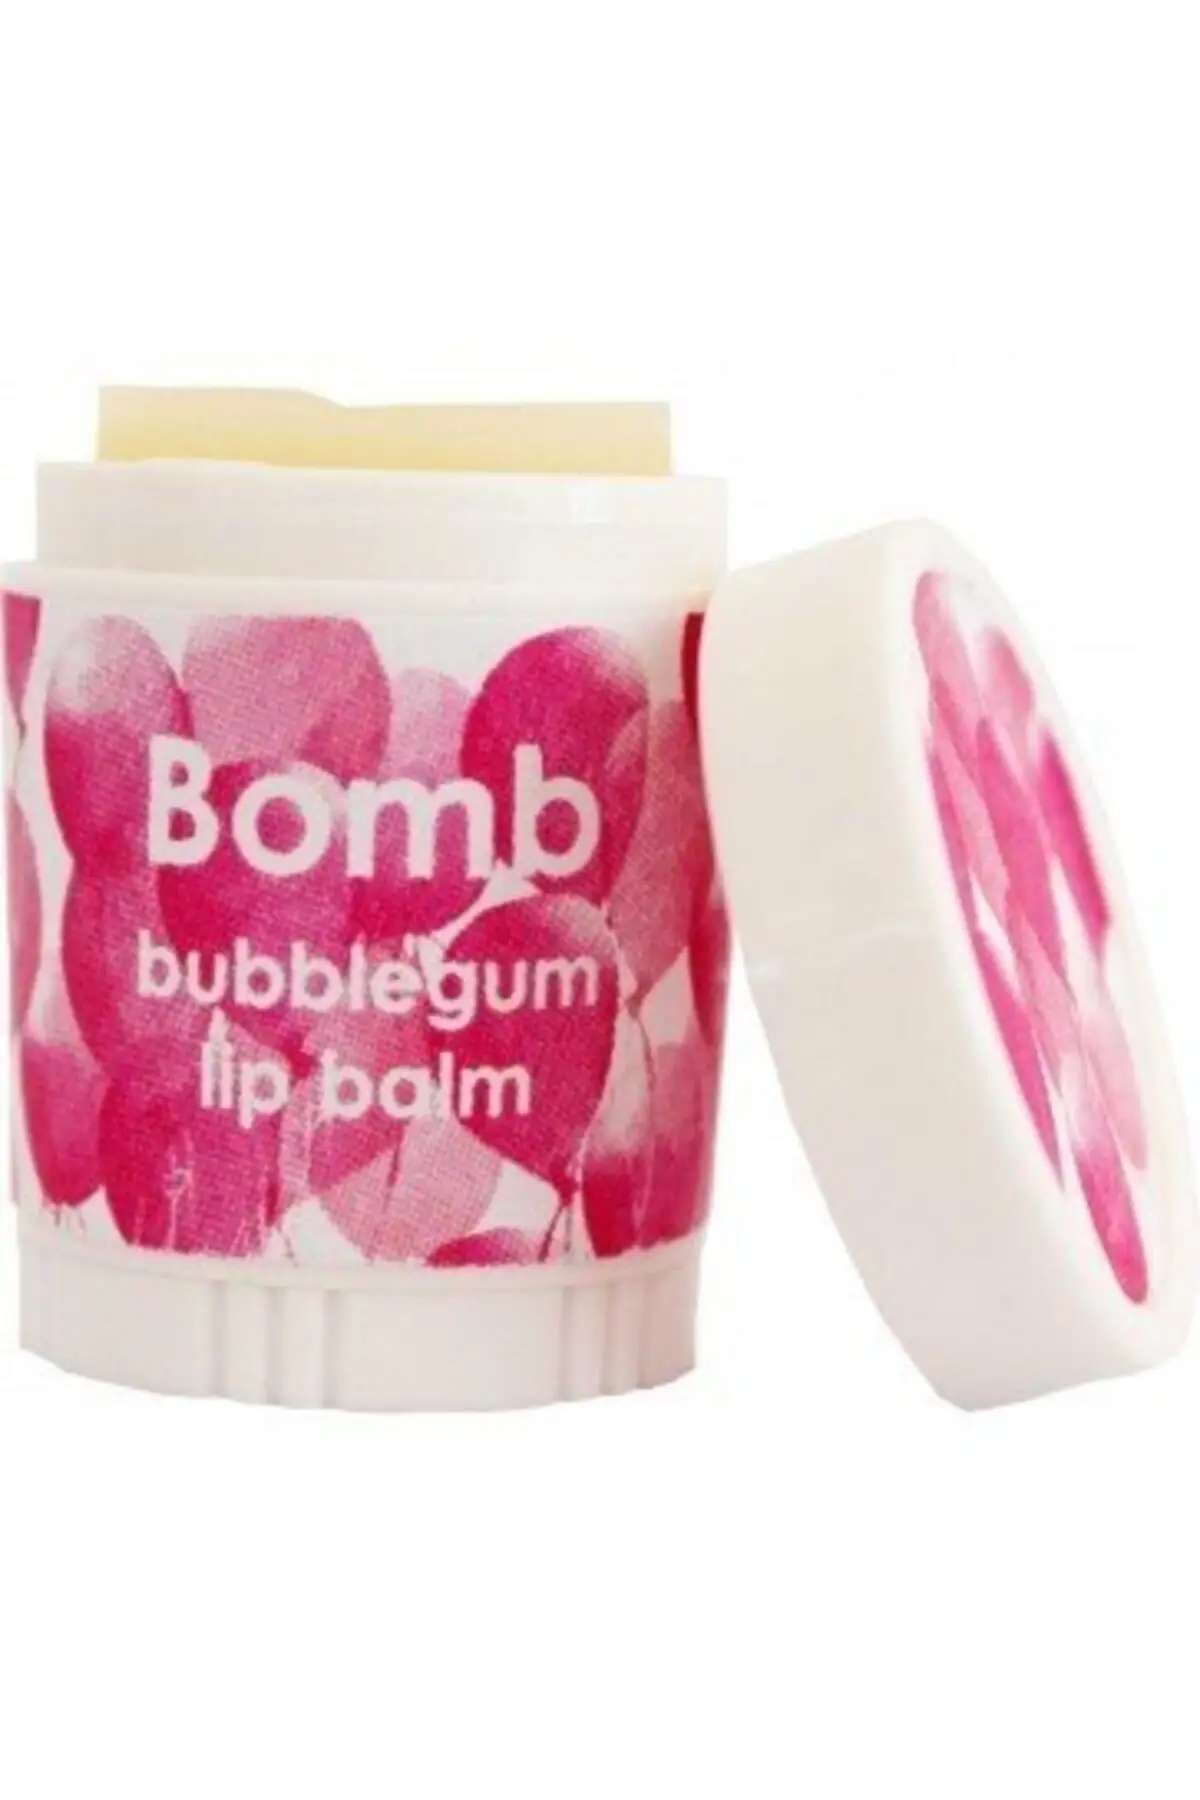 Бомб косметика бальзам для губ. Beauty Bomb Lip Balm Bubble Gum. Beauty Bomb Lip Balm 06. Бальзам для губ мыловаров Бабблгам. Amazing Cosmetics Bubble Gum.